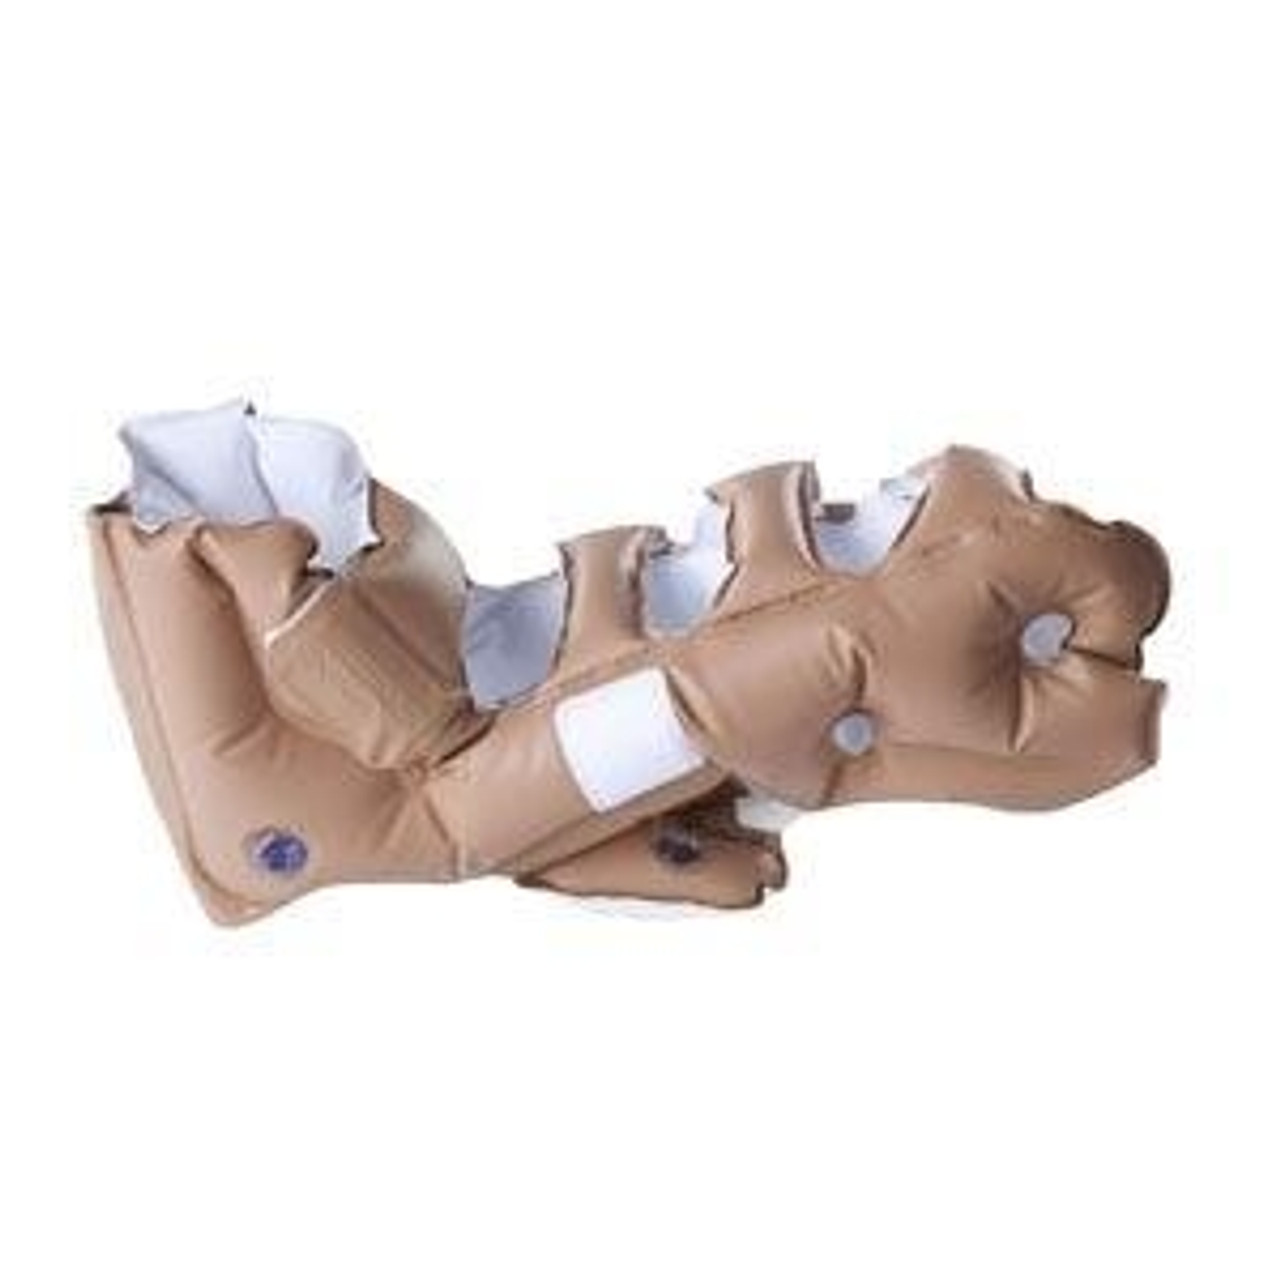 Seat cushion - EHOB - Innovation Rehab